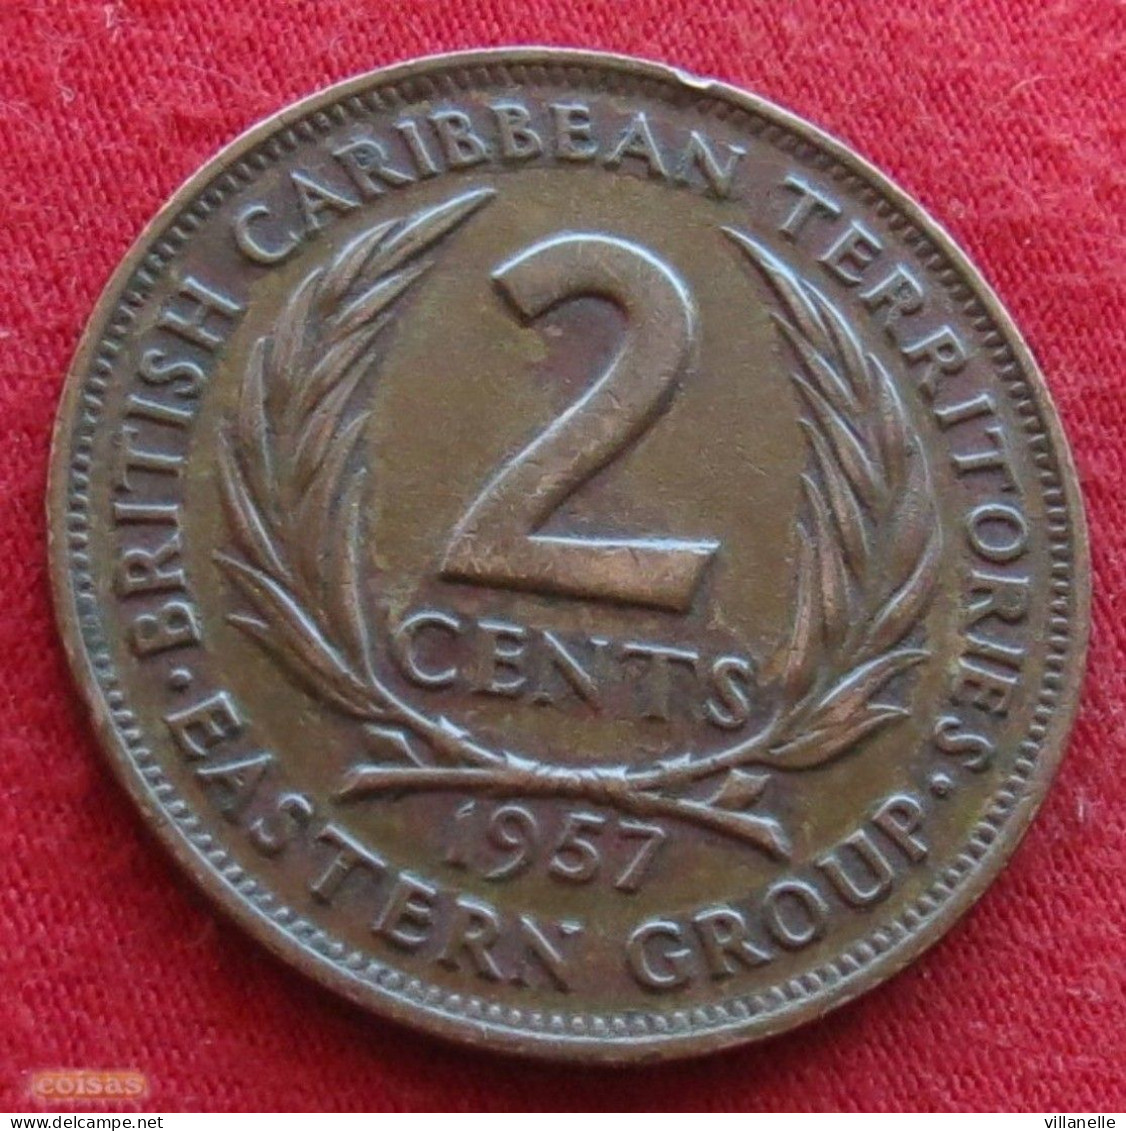 British Caribbean Territories 2 Cents 1957 KM# 3 *V2T Caraibas Caraibes Orientales - British Caribbean Territories